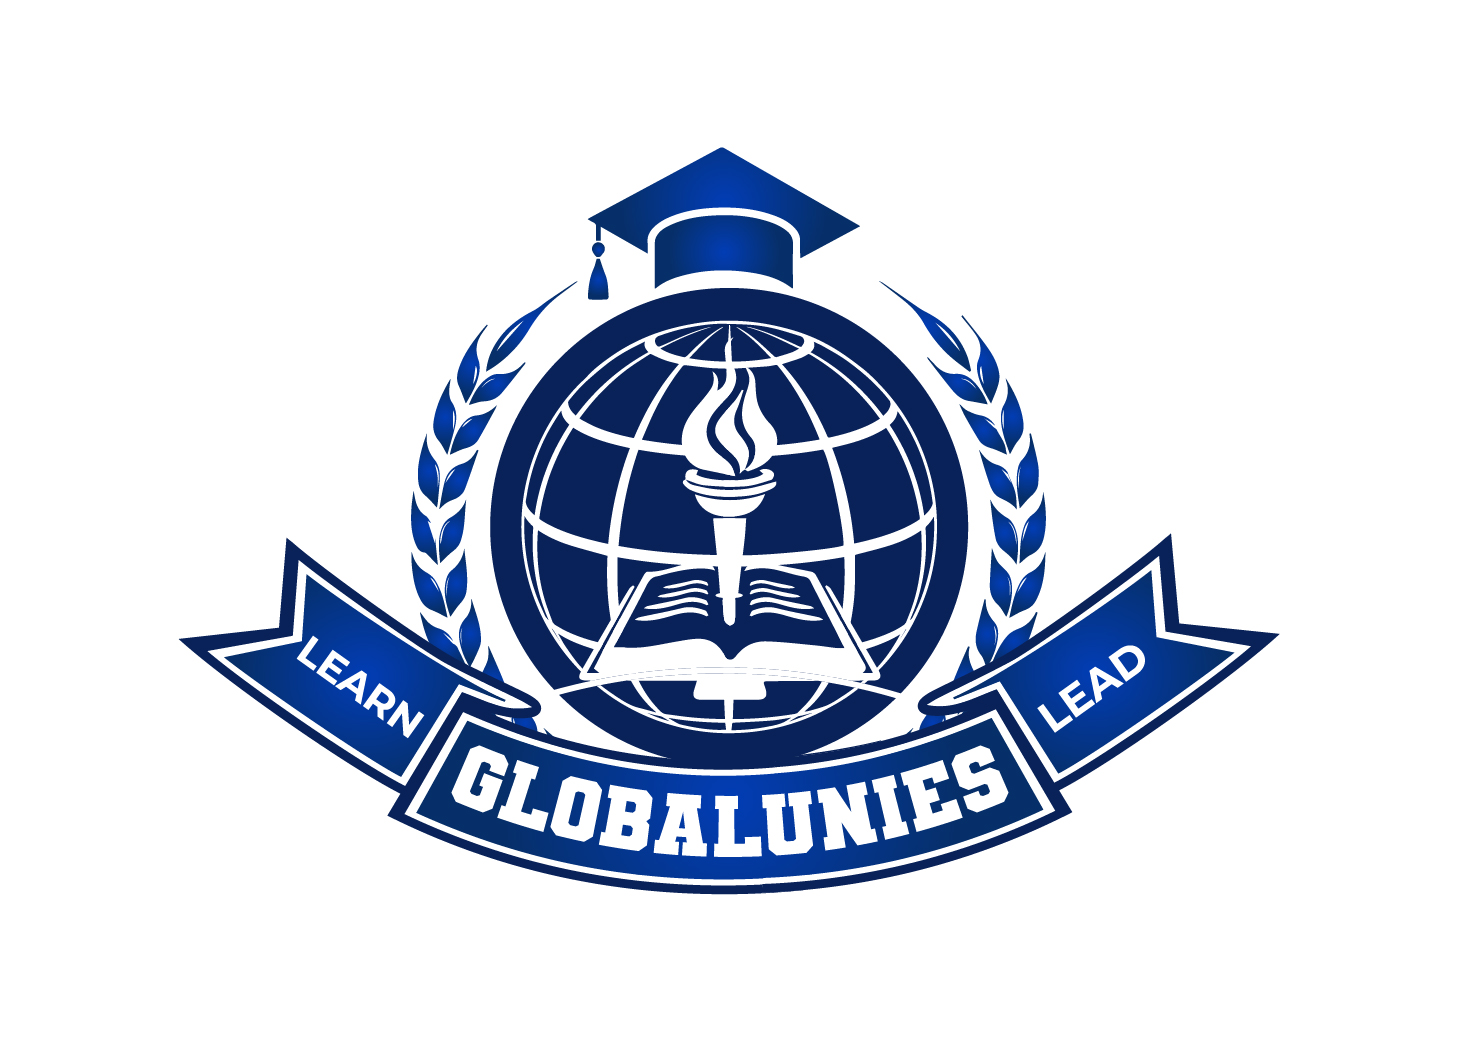 GlobalUnies